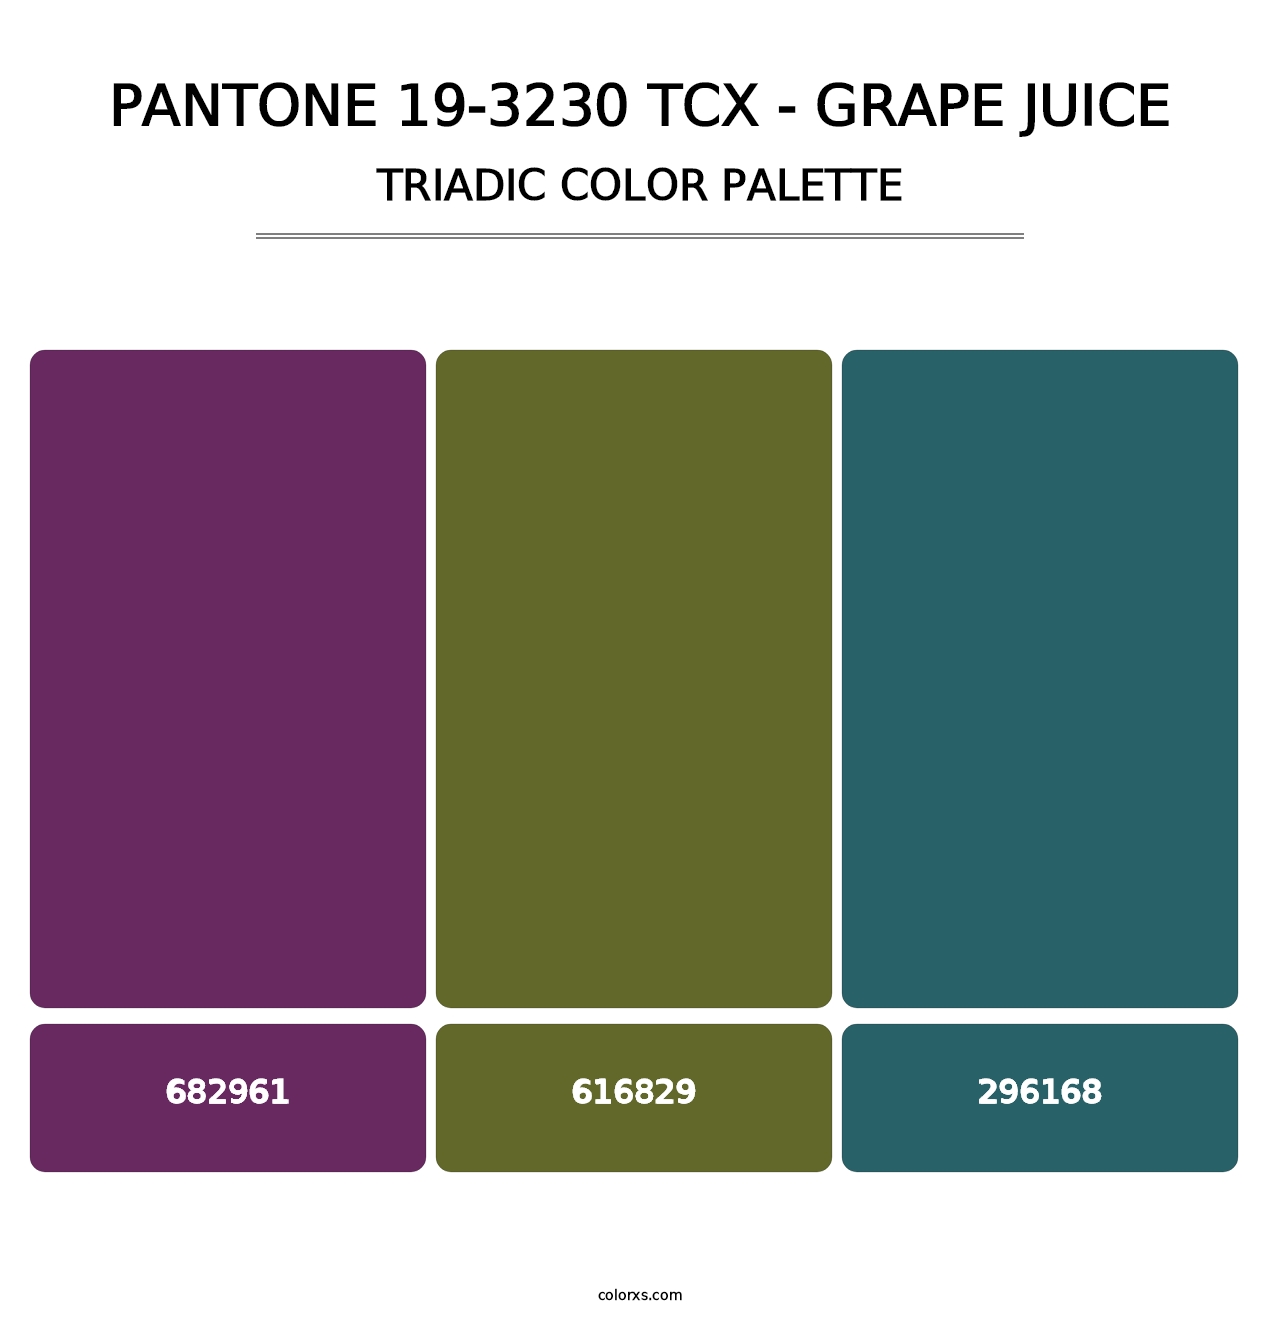 PANTONE 19-3230 TCX - Grape Juice - Triadic Color Palette